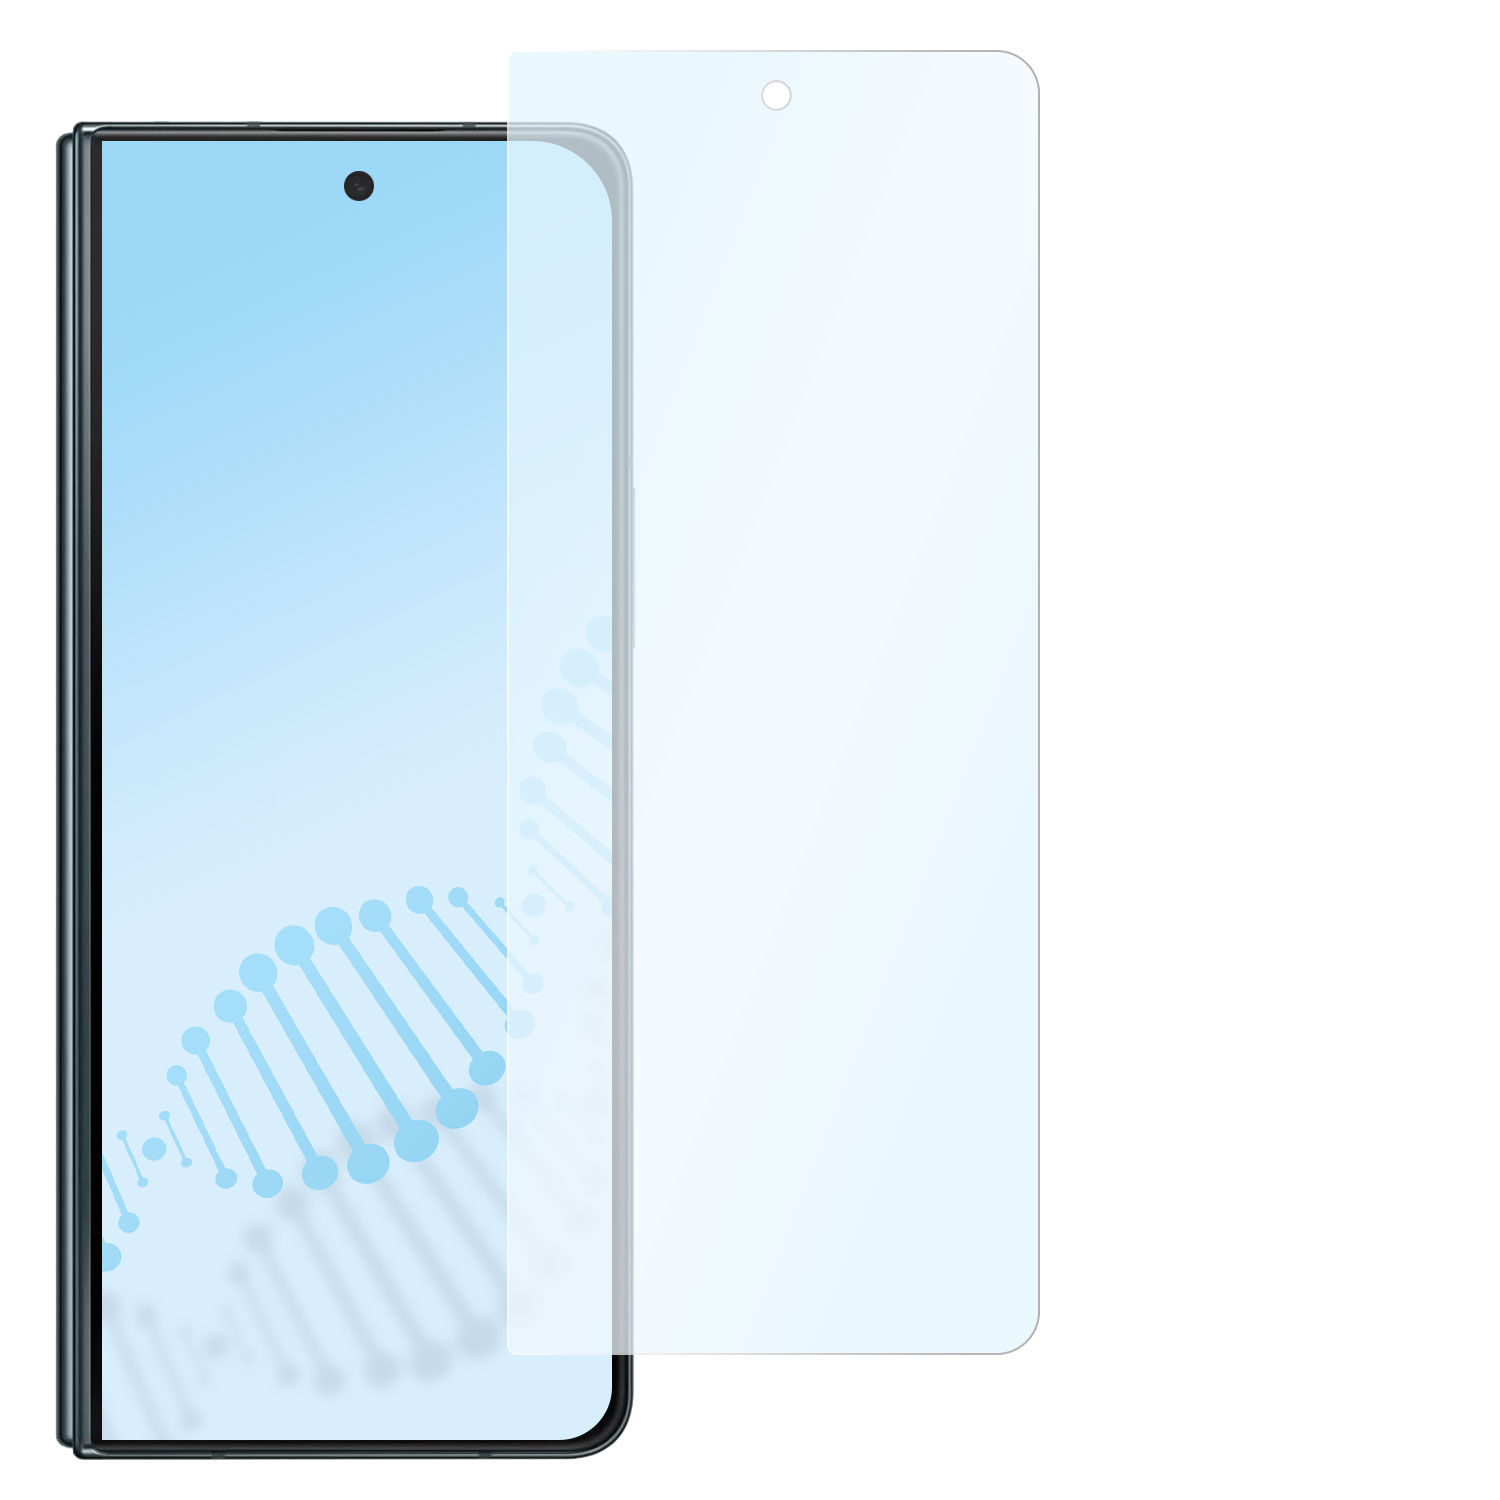 Z antibakteriell flexibles Samsung Fold Galaxy Hybridglas 5G) SLABO 4 Displayschutz(für